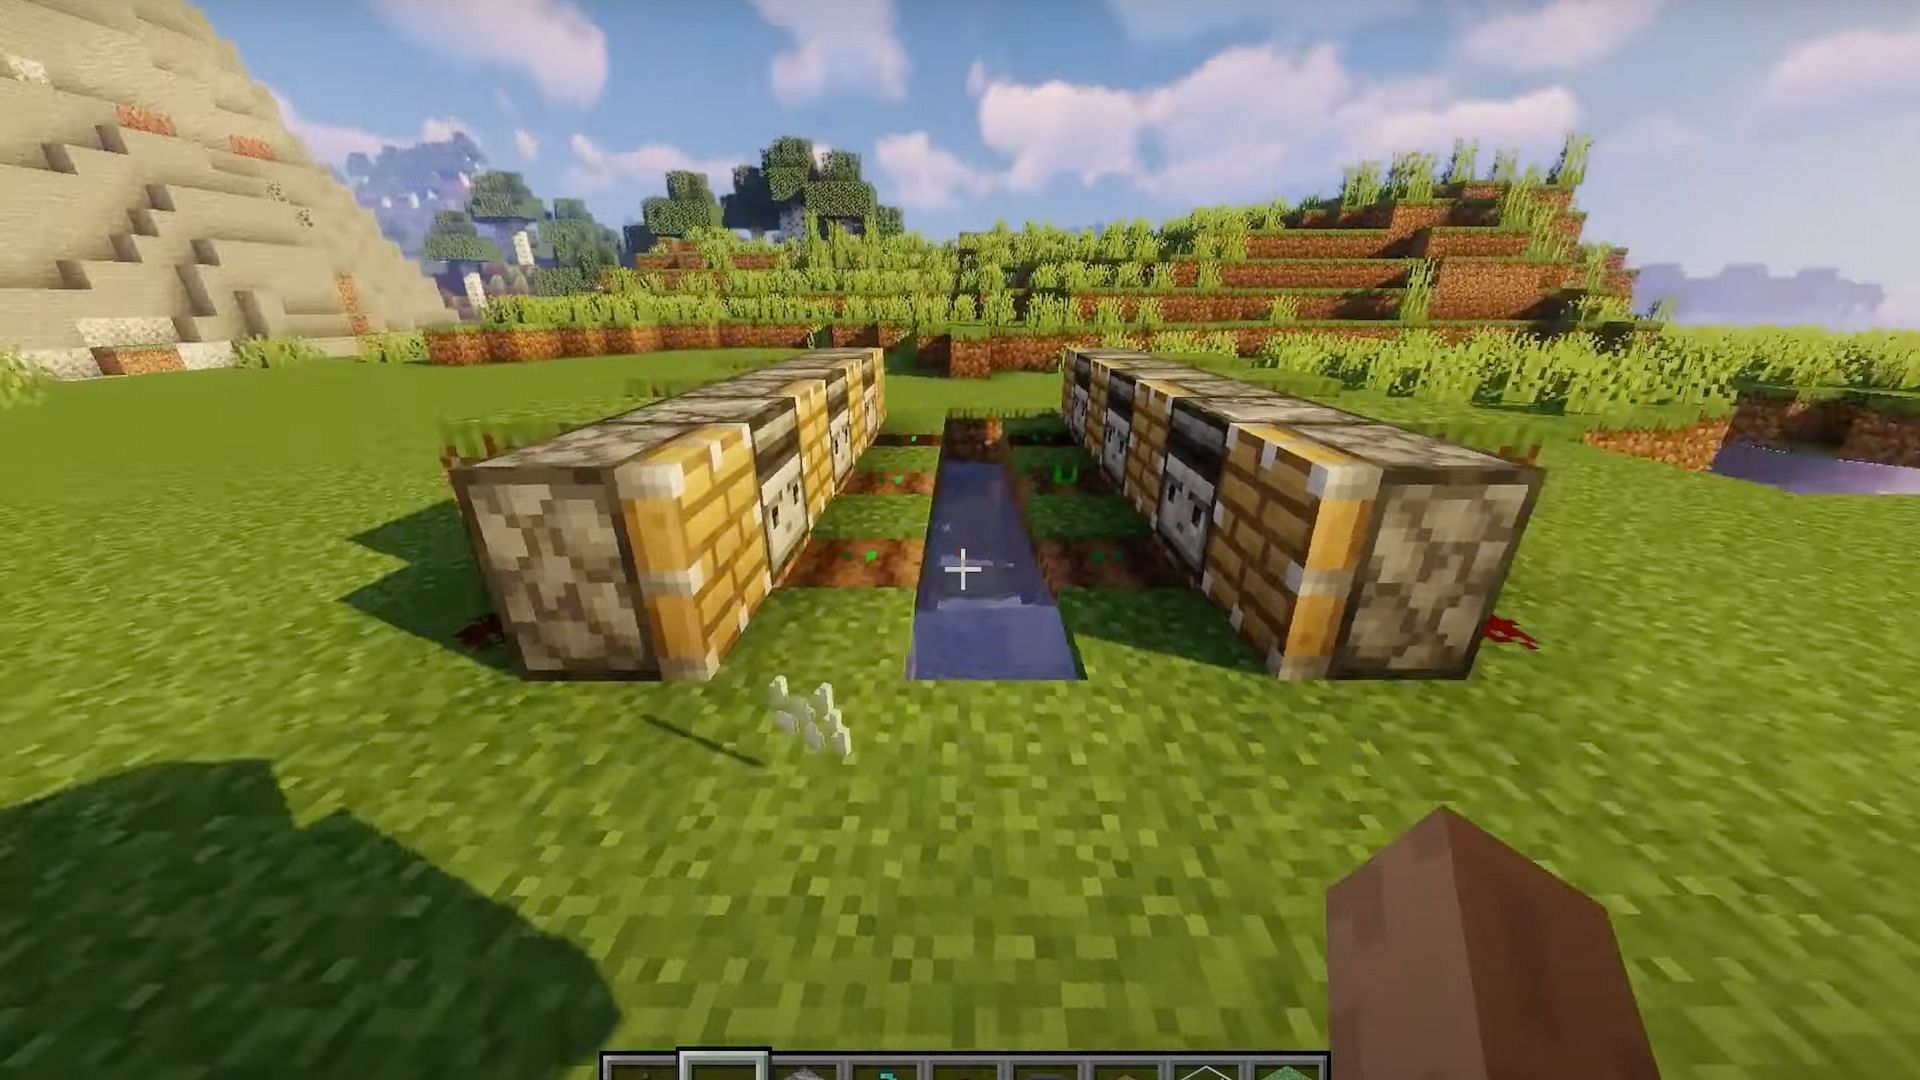 Players should plant pumpkin seeds to start their pumpkin farm (Image via NaMiature/YouTube)